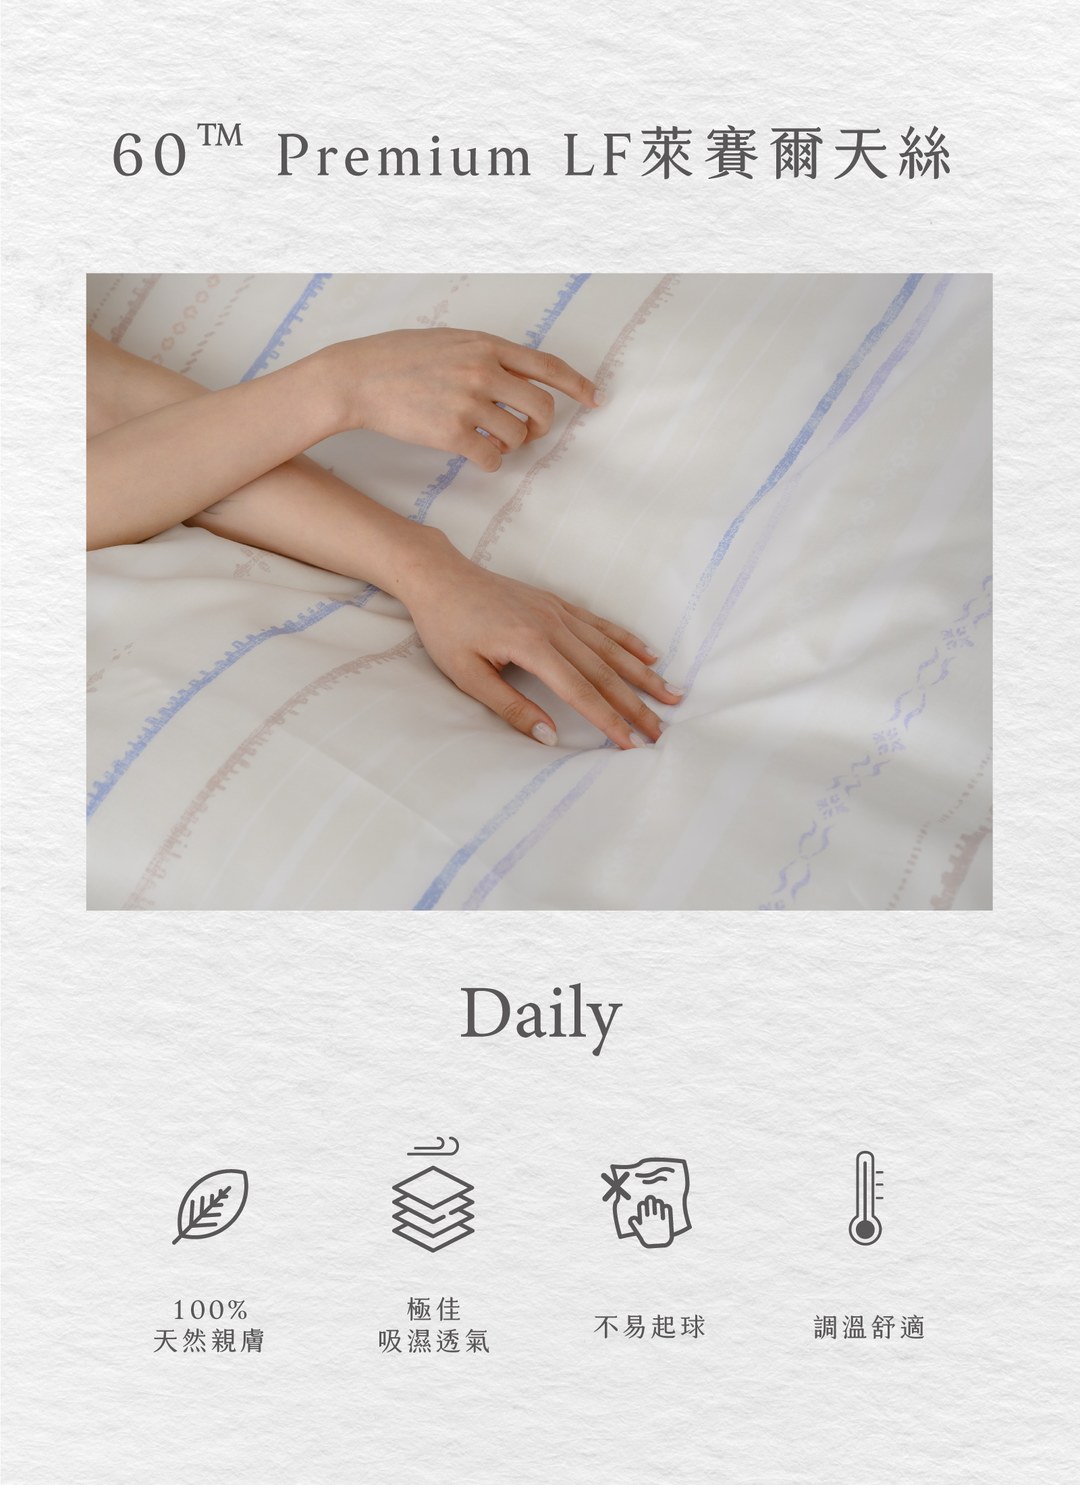 Daily - 天絲四件組 ( 床包 + 被套 + 枕套 )